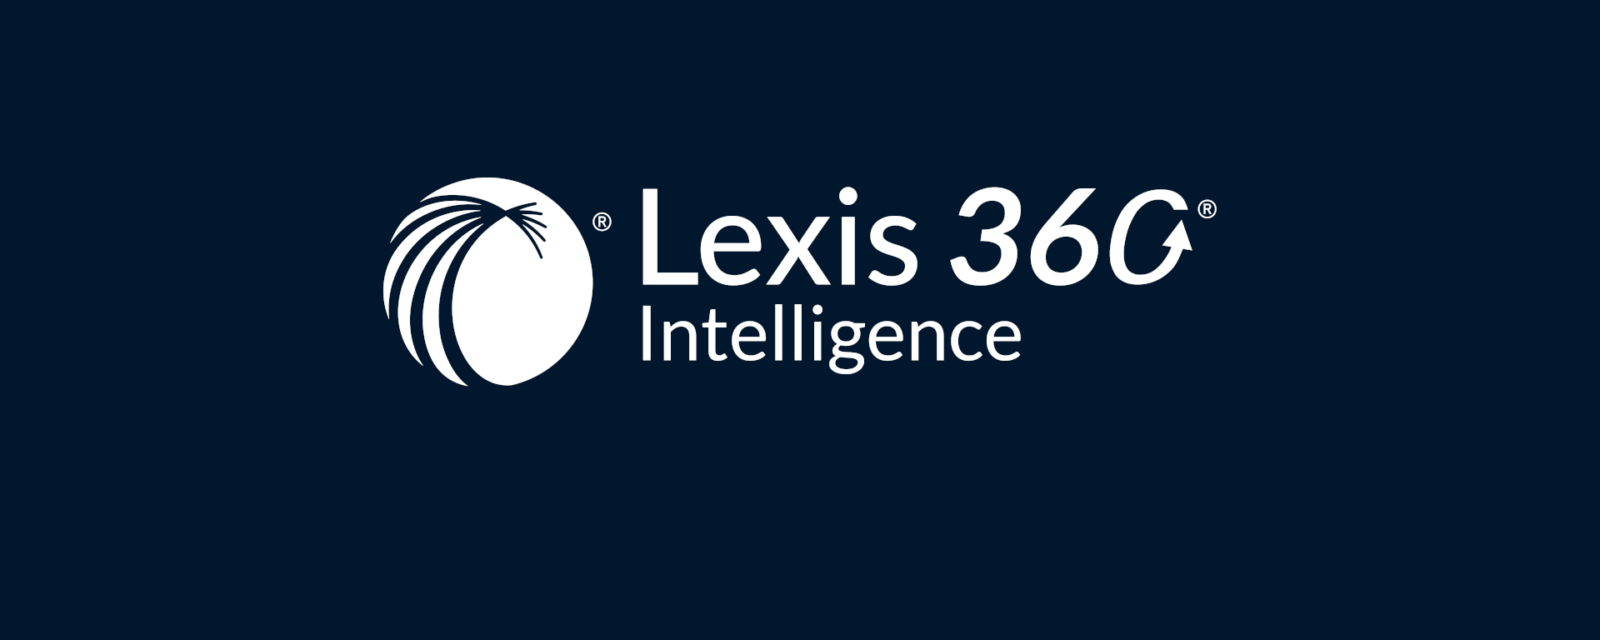 Lexis 360 Intelligence